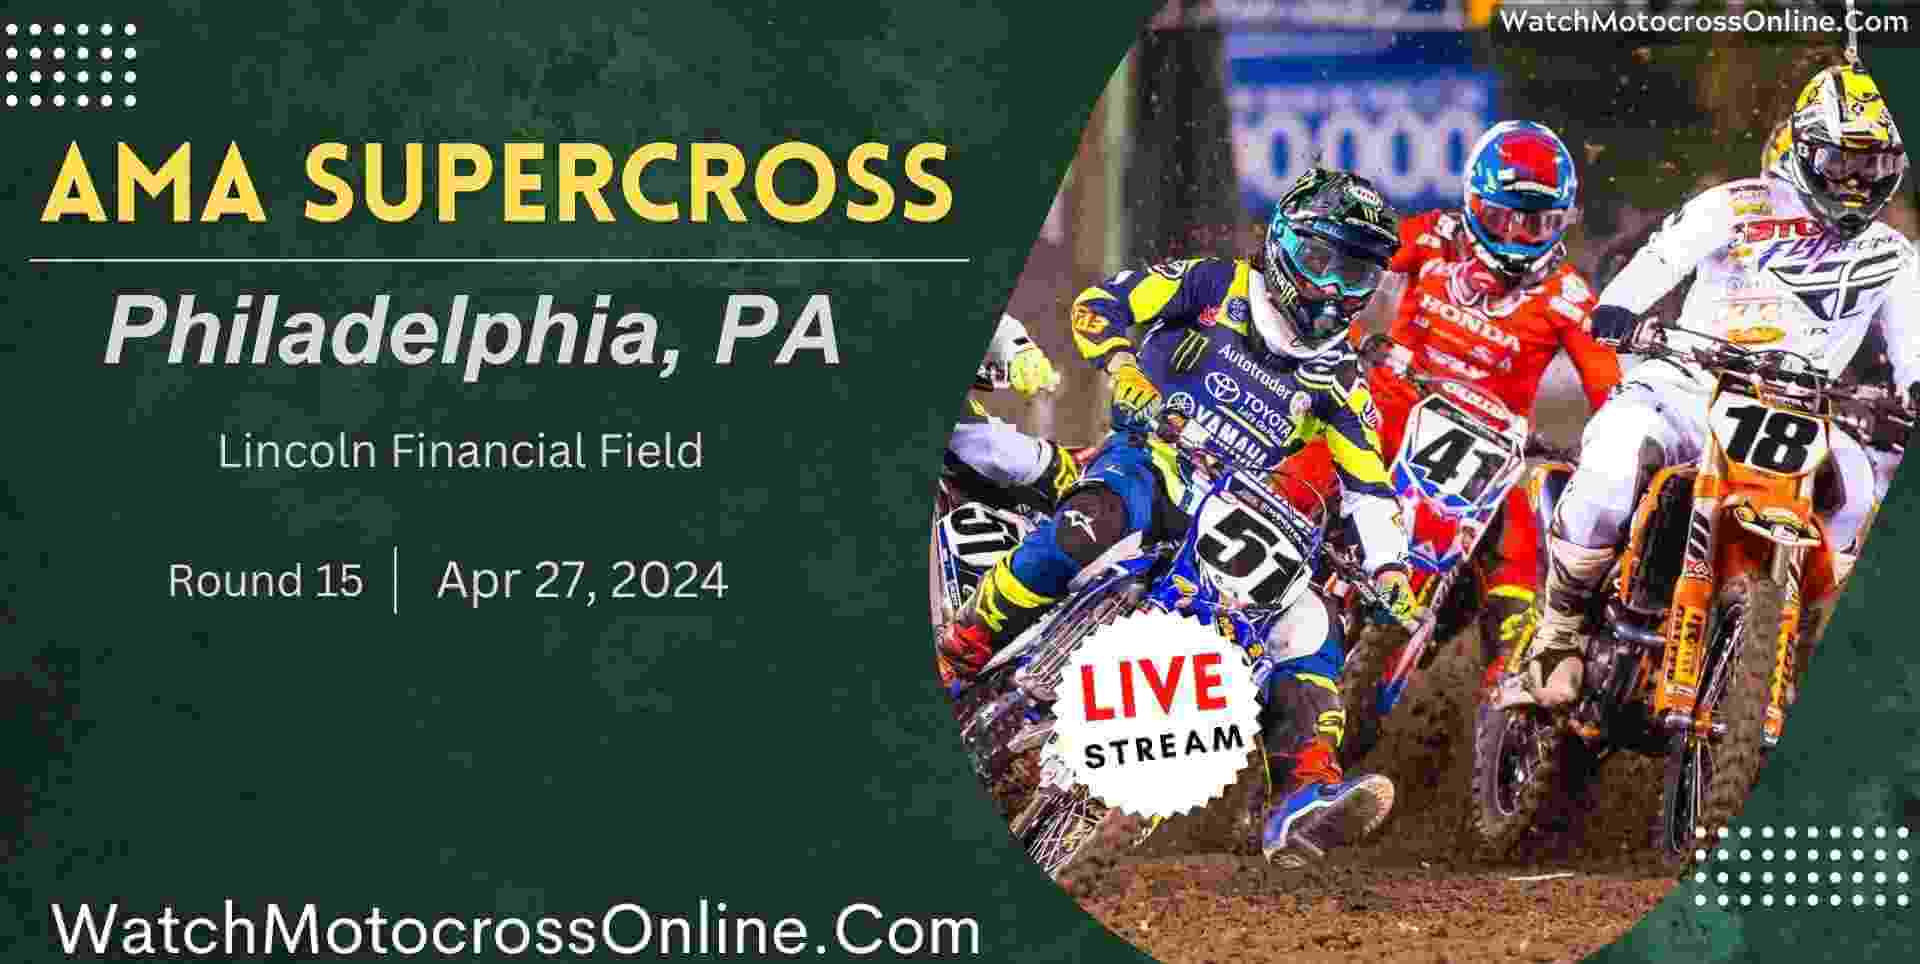 AMA Supercross Philadelphia Live Stream 2024 Round 15